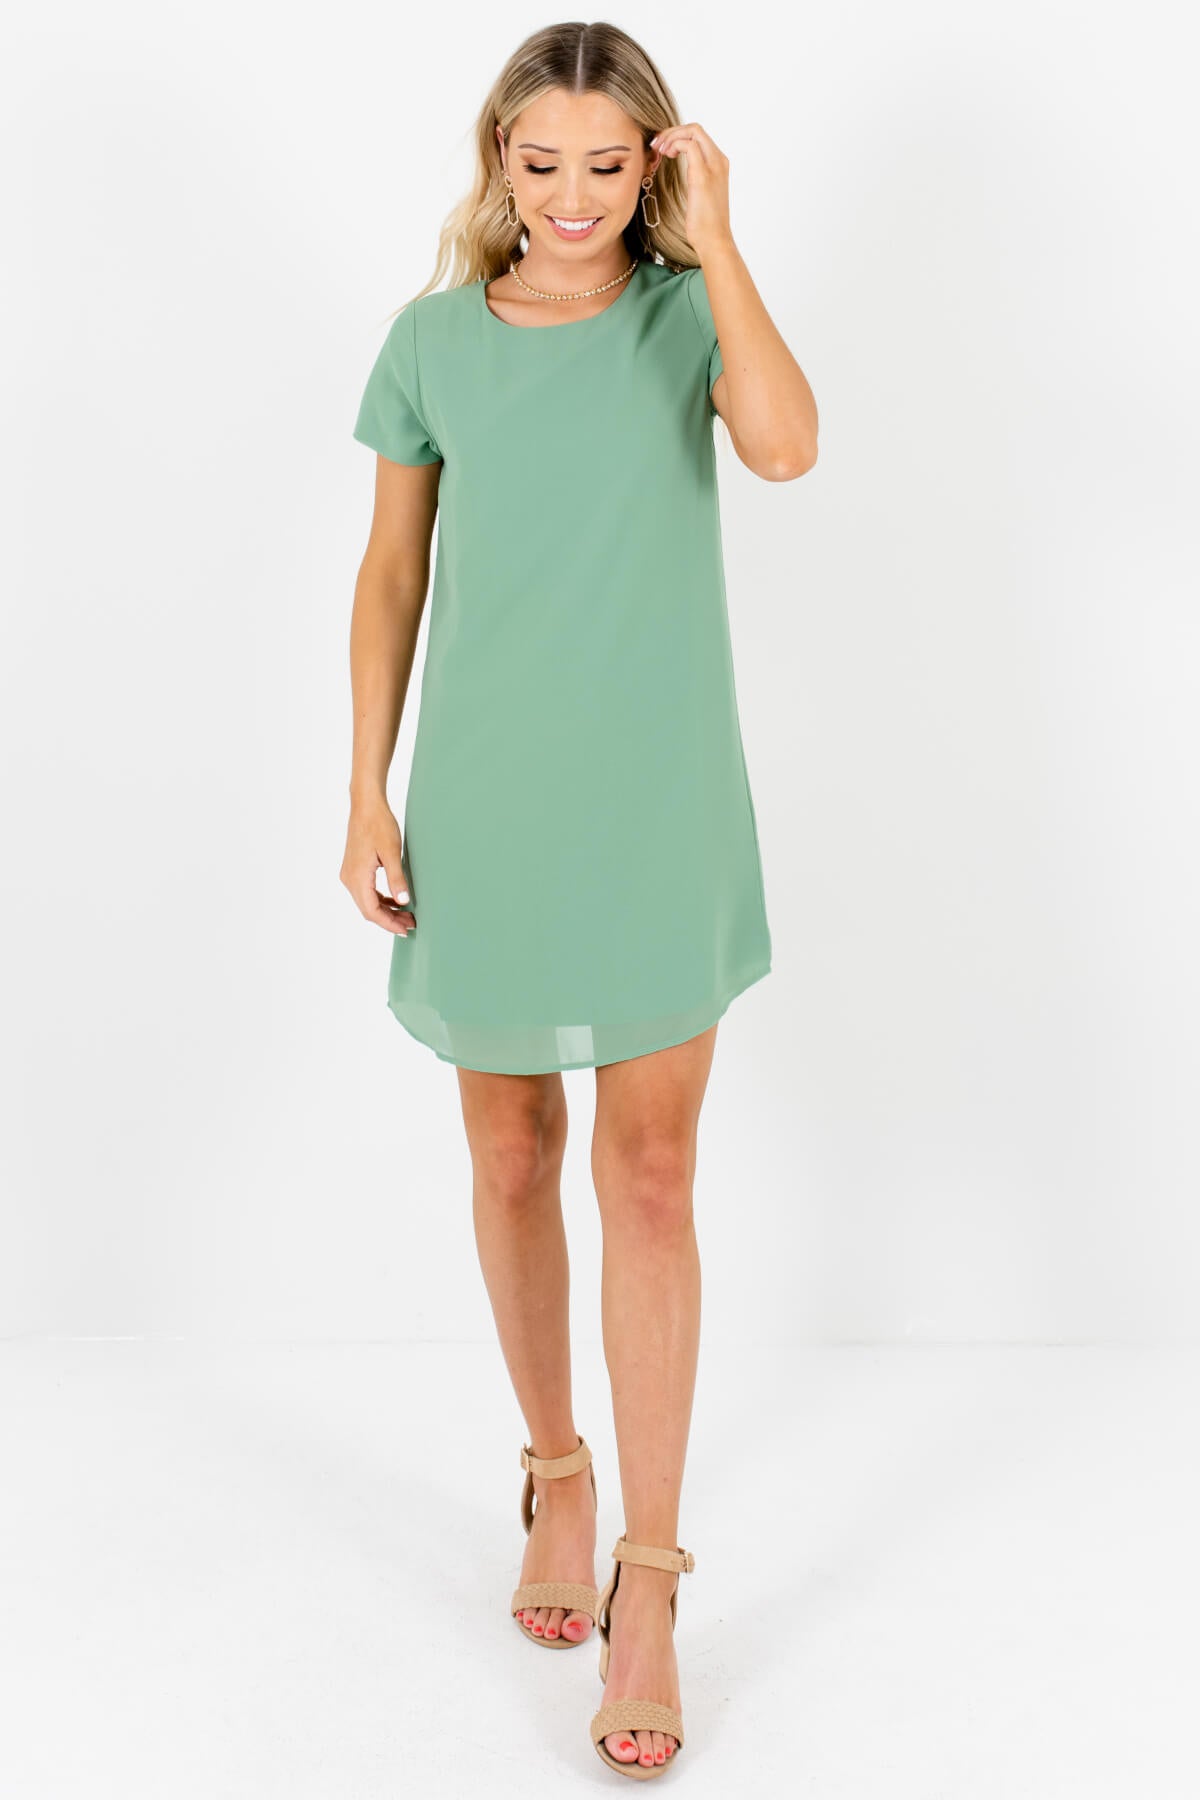 Light Green Cute Mini Dresses Affordable Online Boutique